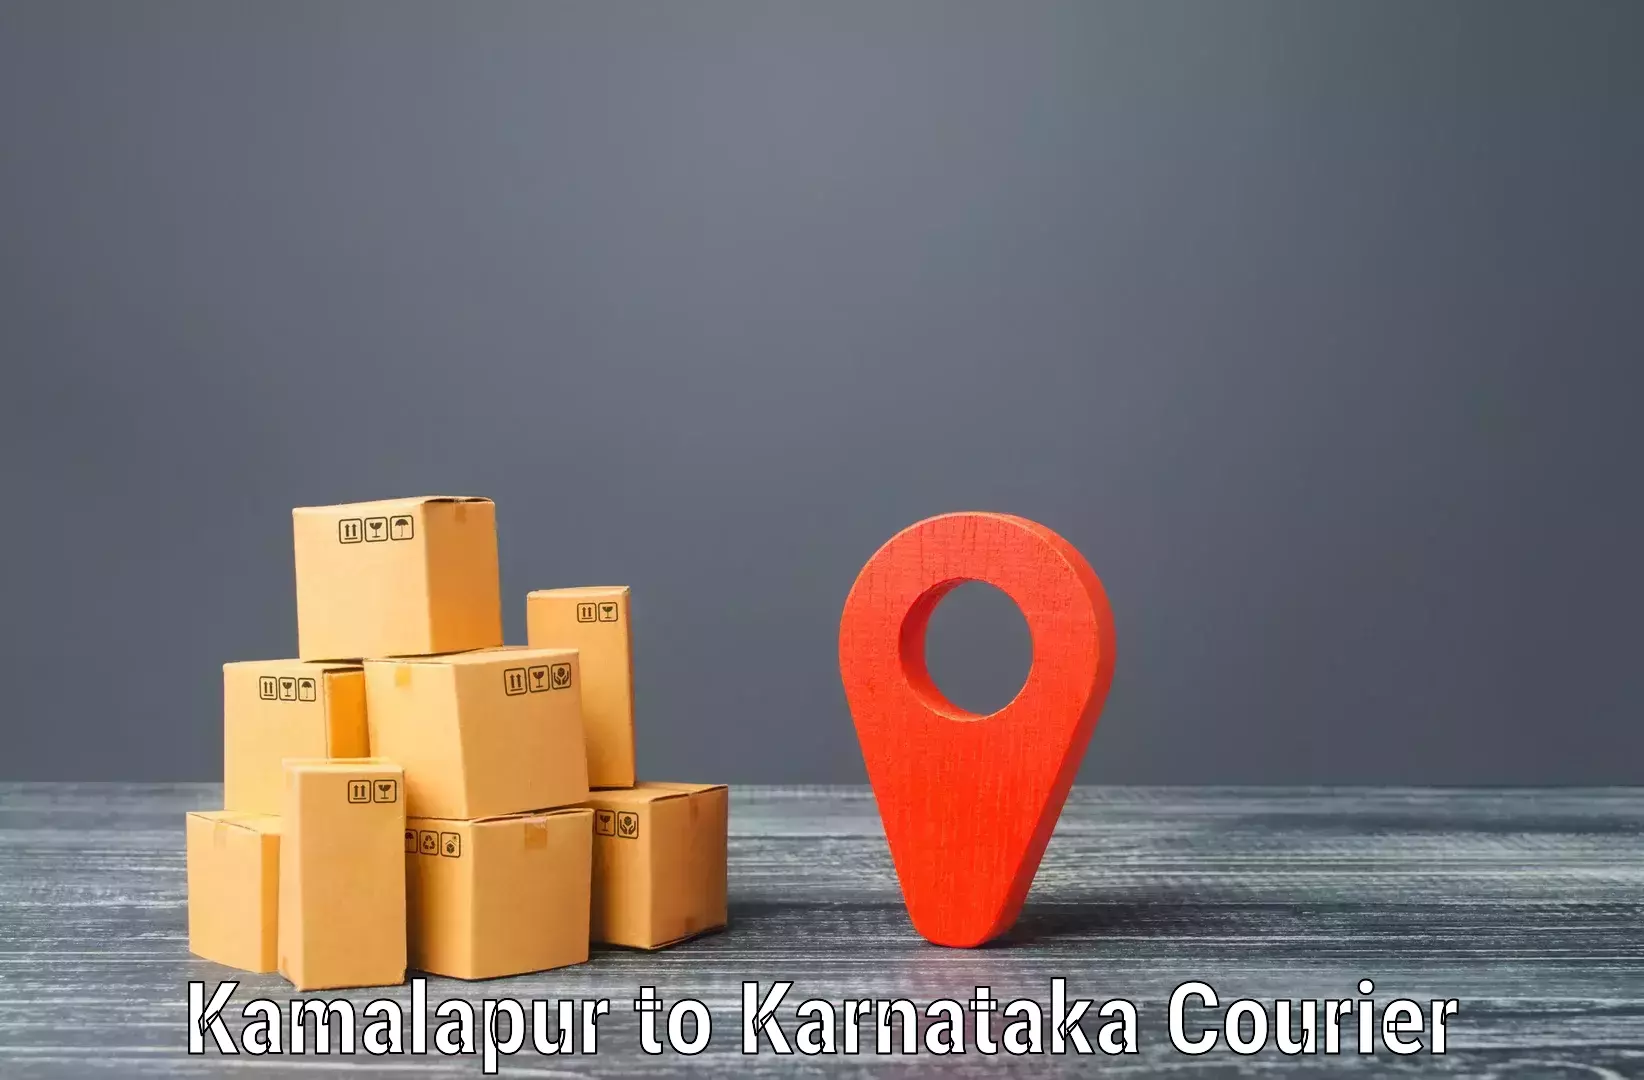 Quick dispatch service Kamalapur to Hospet